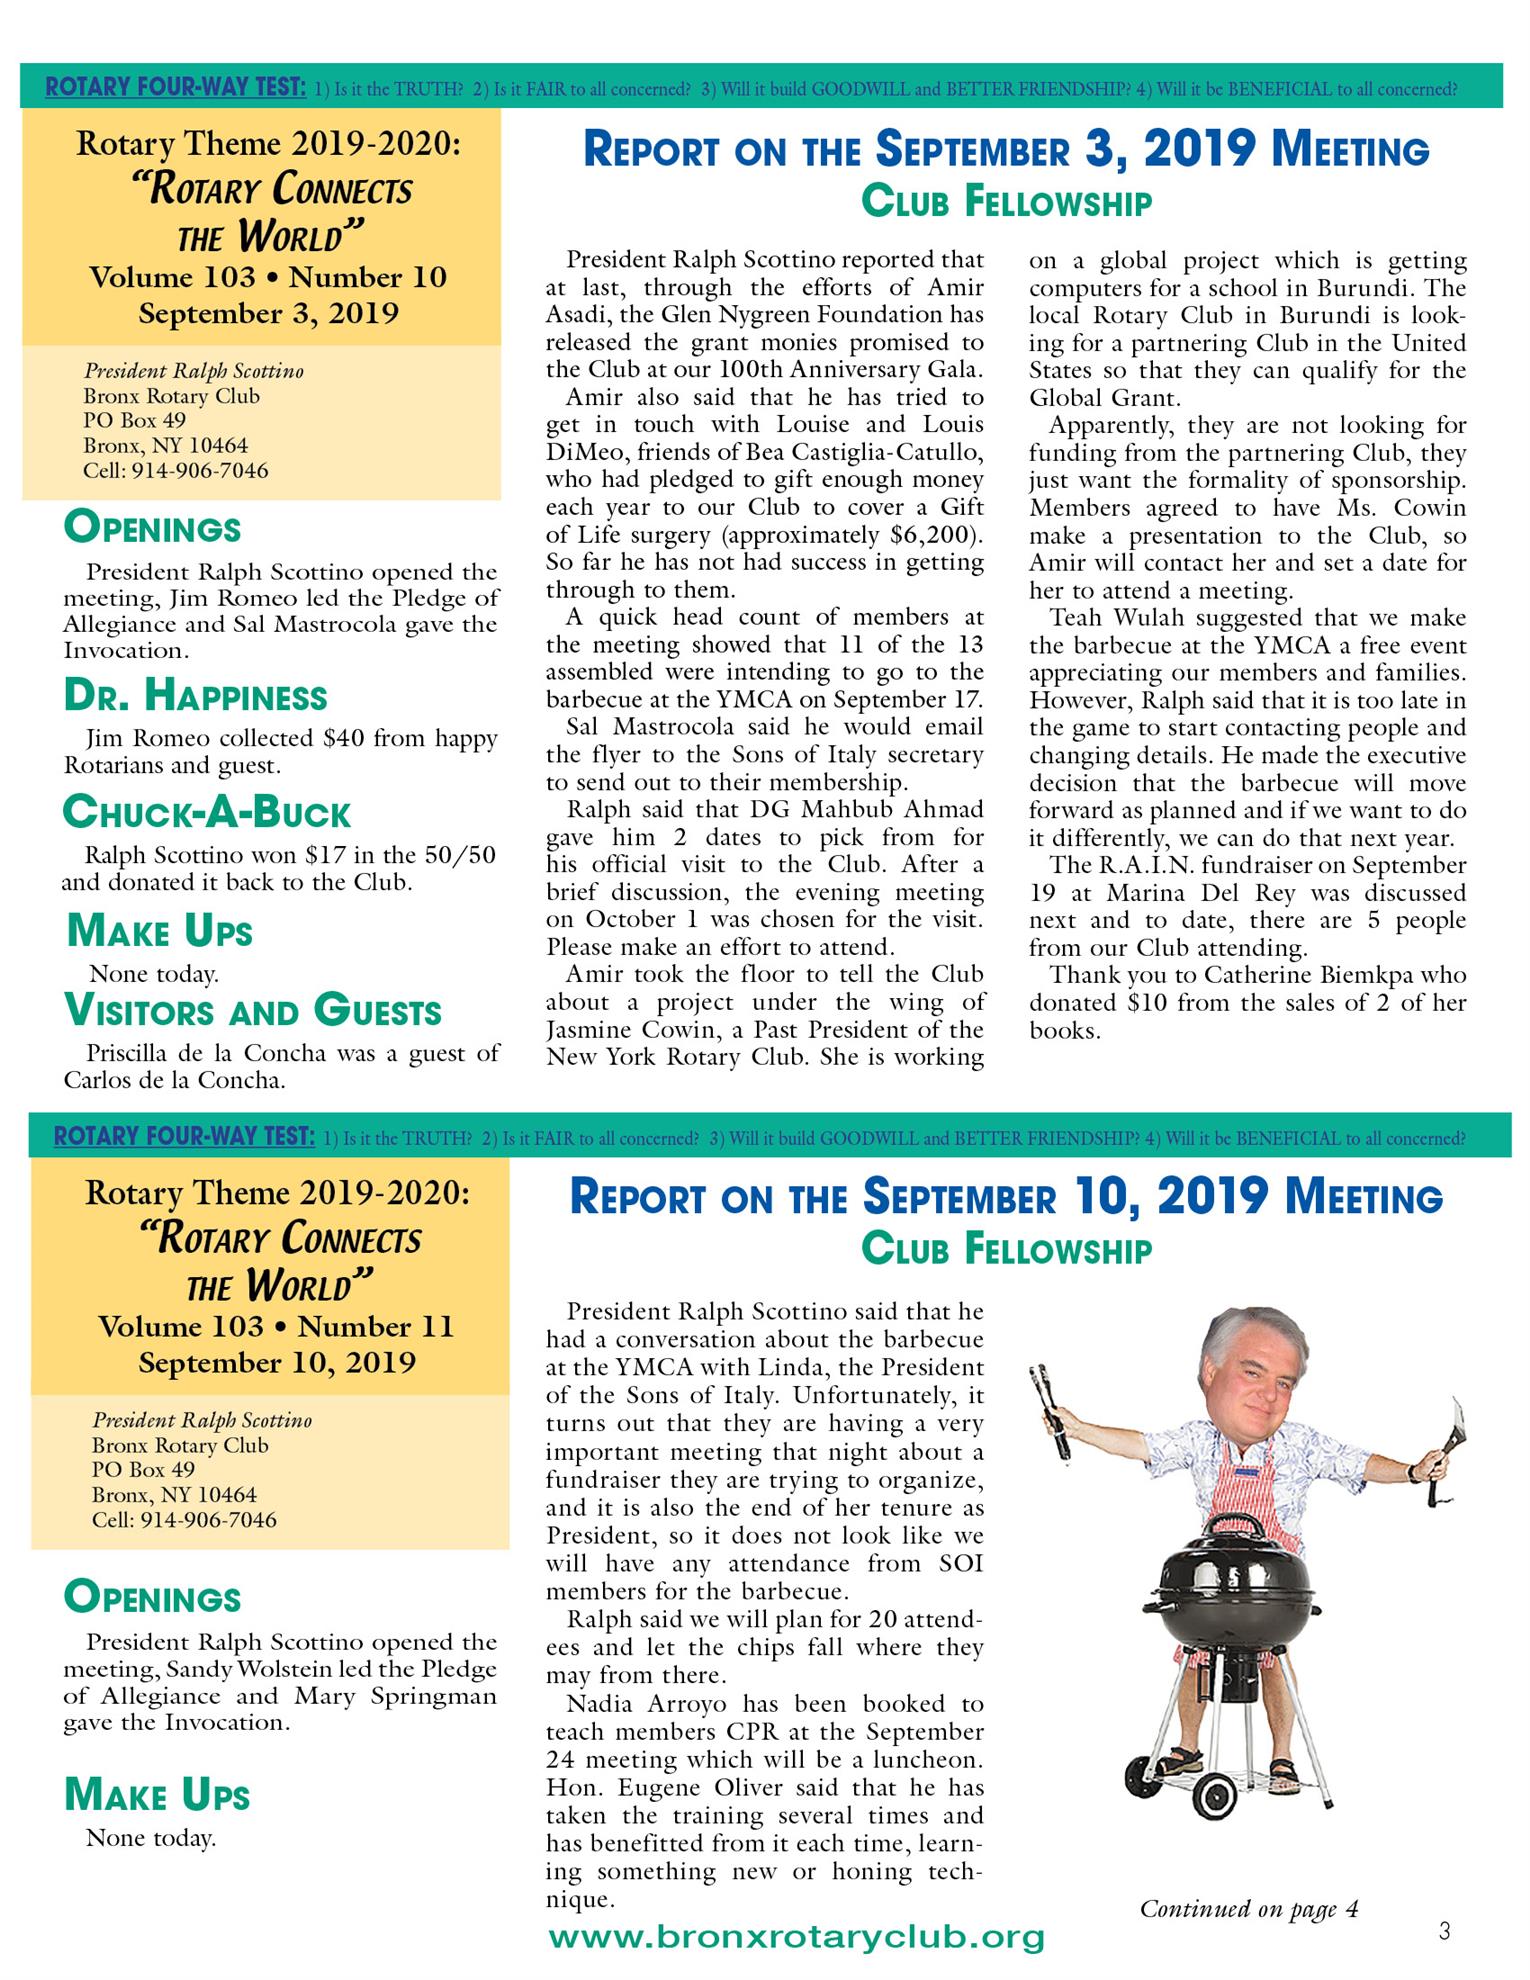 Tuesdays Newsletter 8/27, 9/3 & 9/10/2019 p3